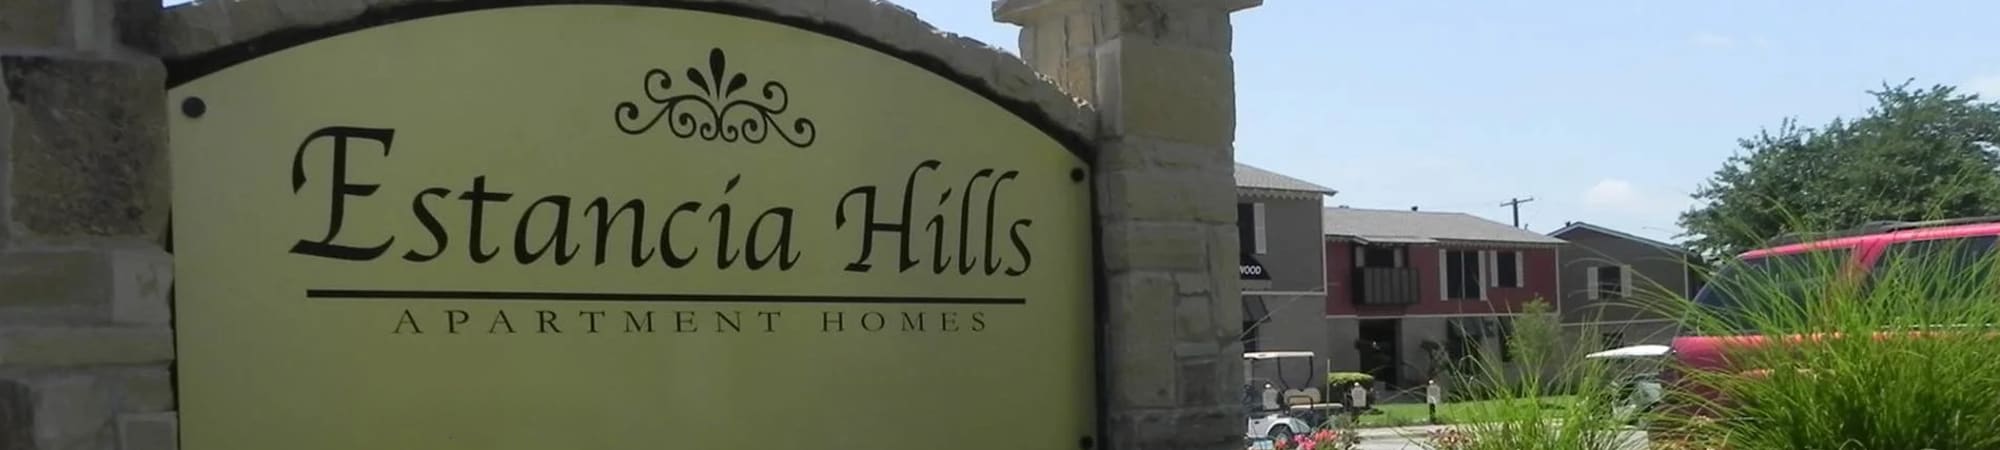 Schedule a tour of Estancia Hills in Dallas, Texas